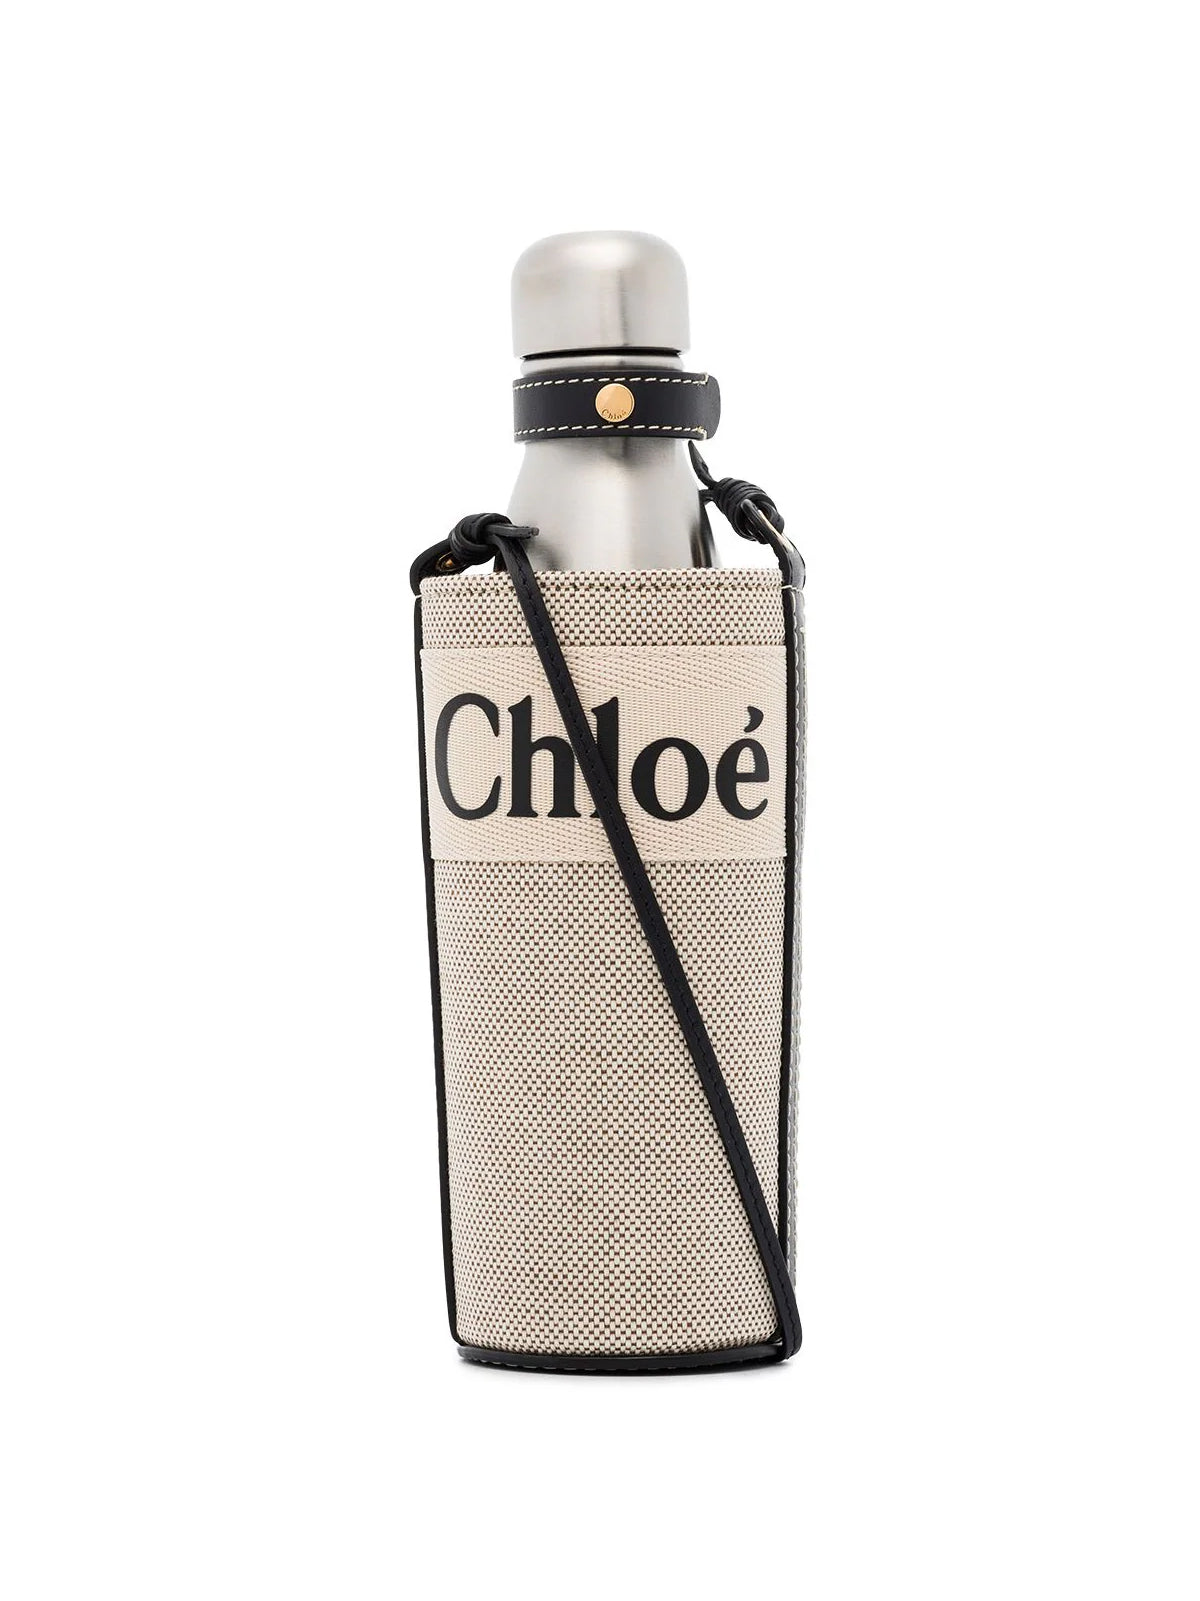 ChloÃ©-OUTLET-SALE-Fredy Bottle Bag-ARCHIVIST